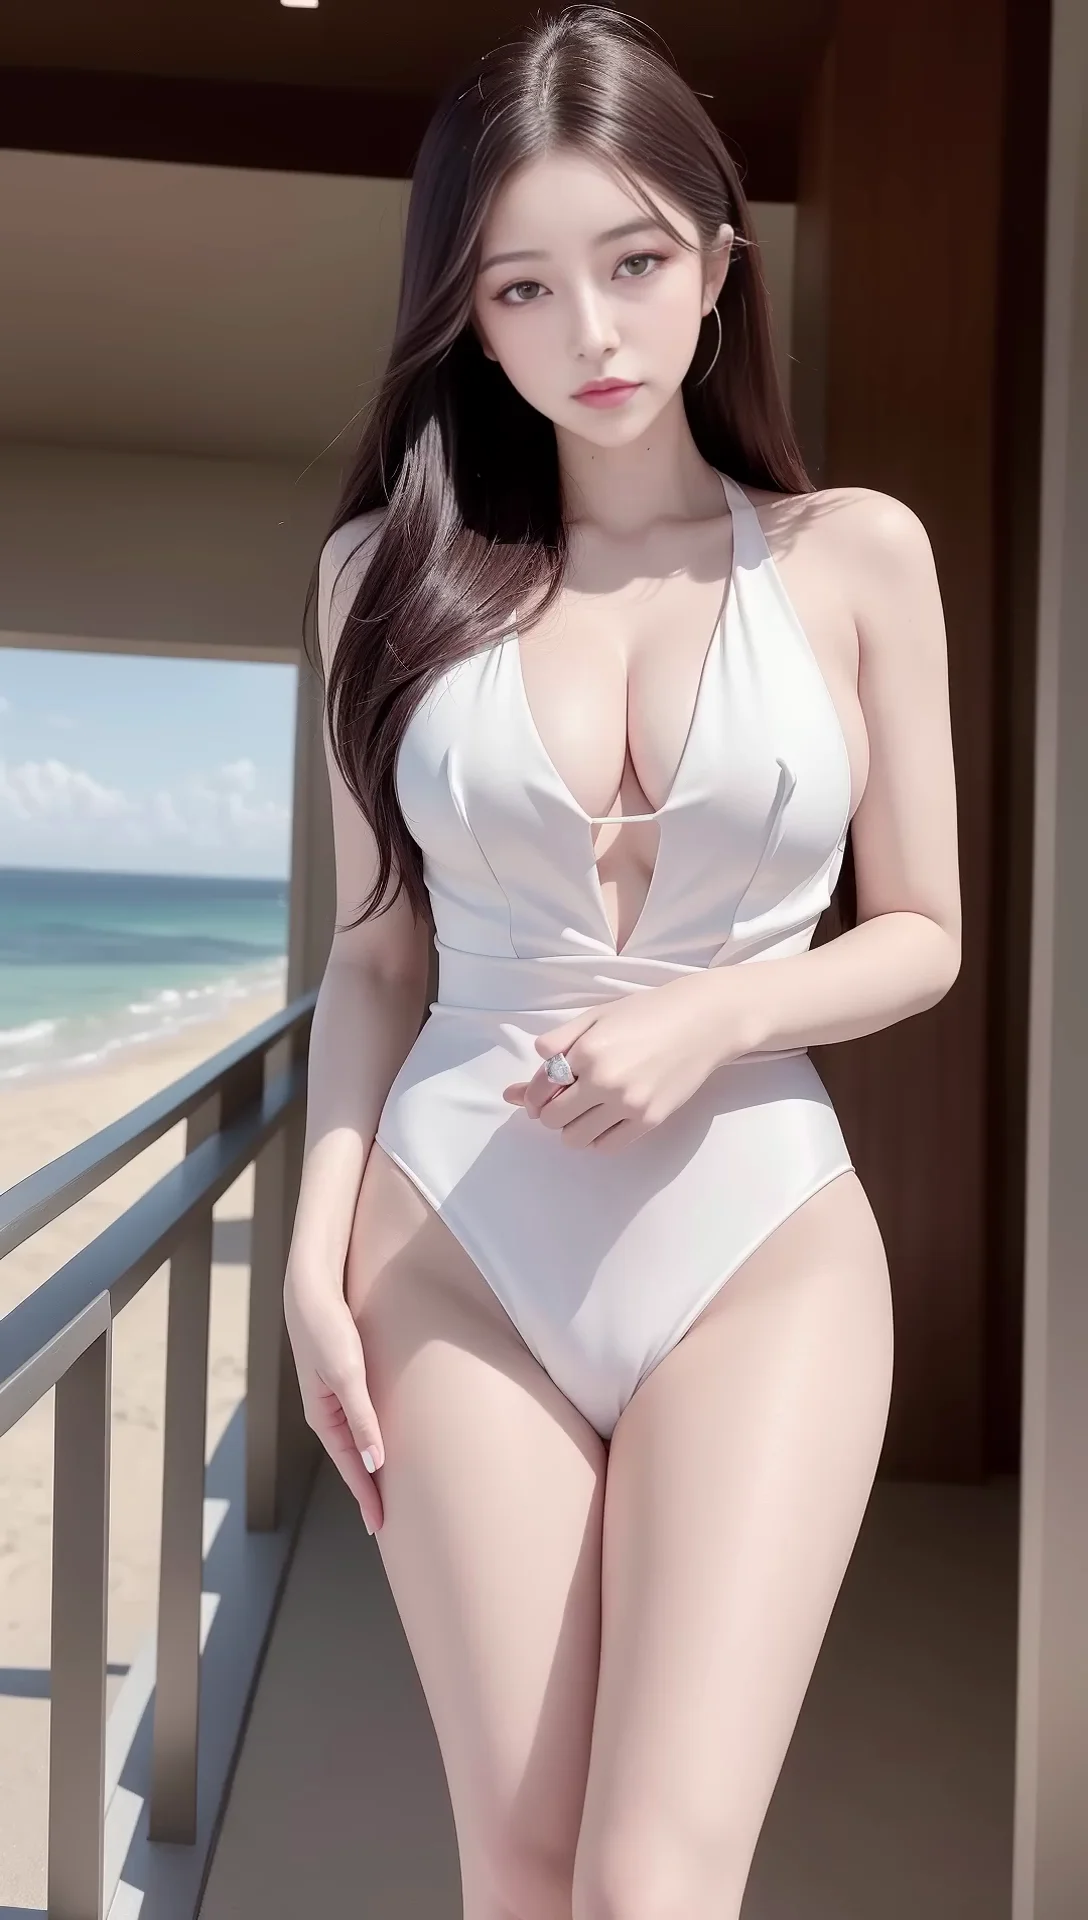 Ai Art Lookbook: Sexy Girl Swimsuit on the Resort Terrace Image 14